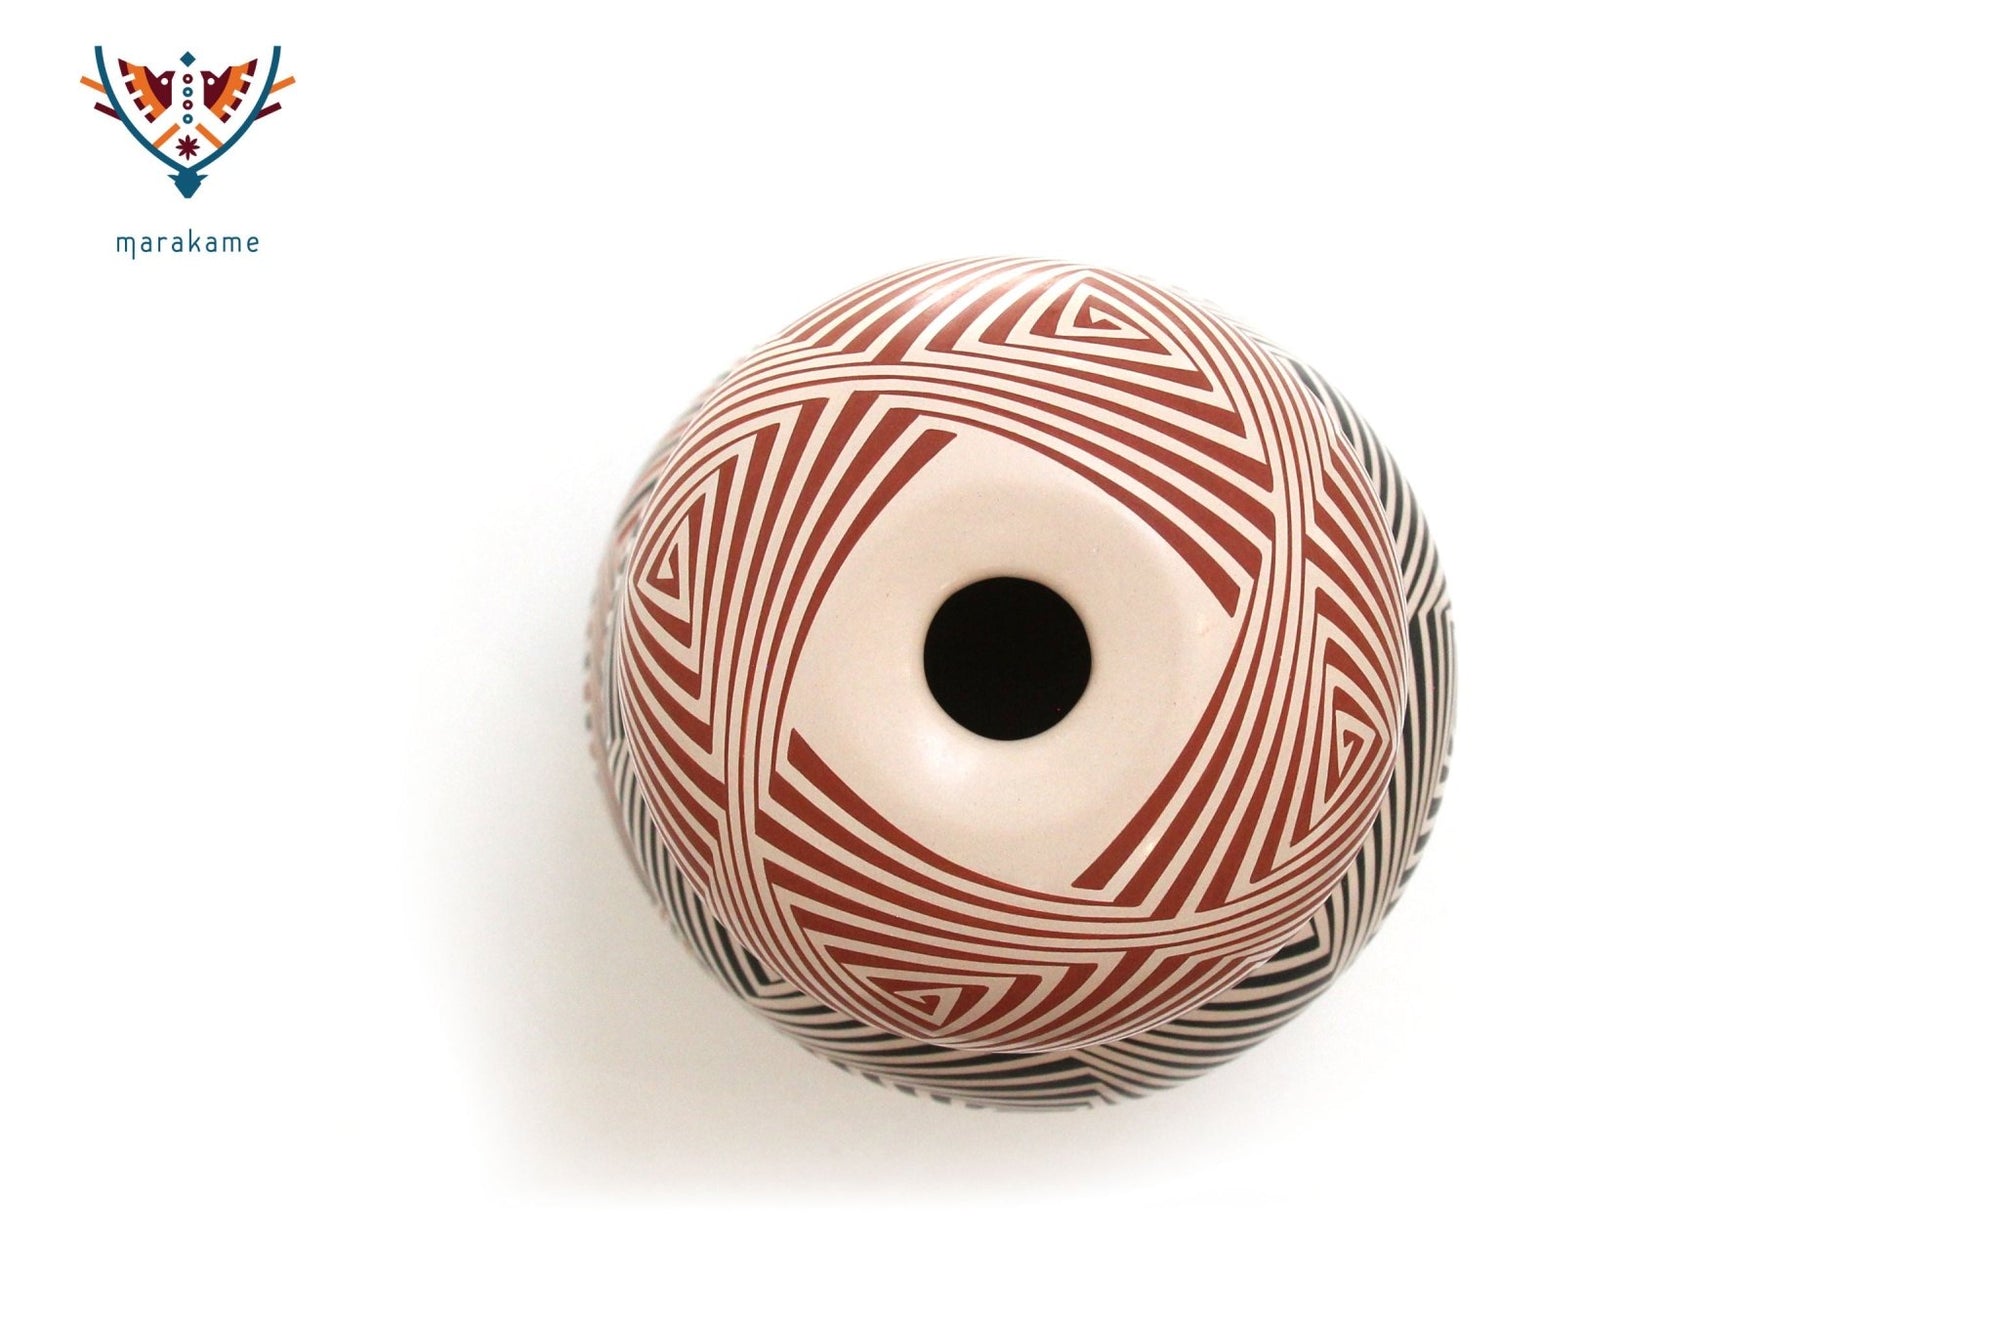 Mata Ortiz Keramik – Turm – Huichol-Kunst – Marakame